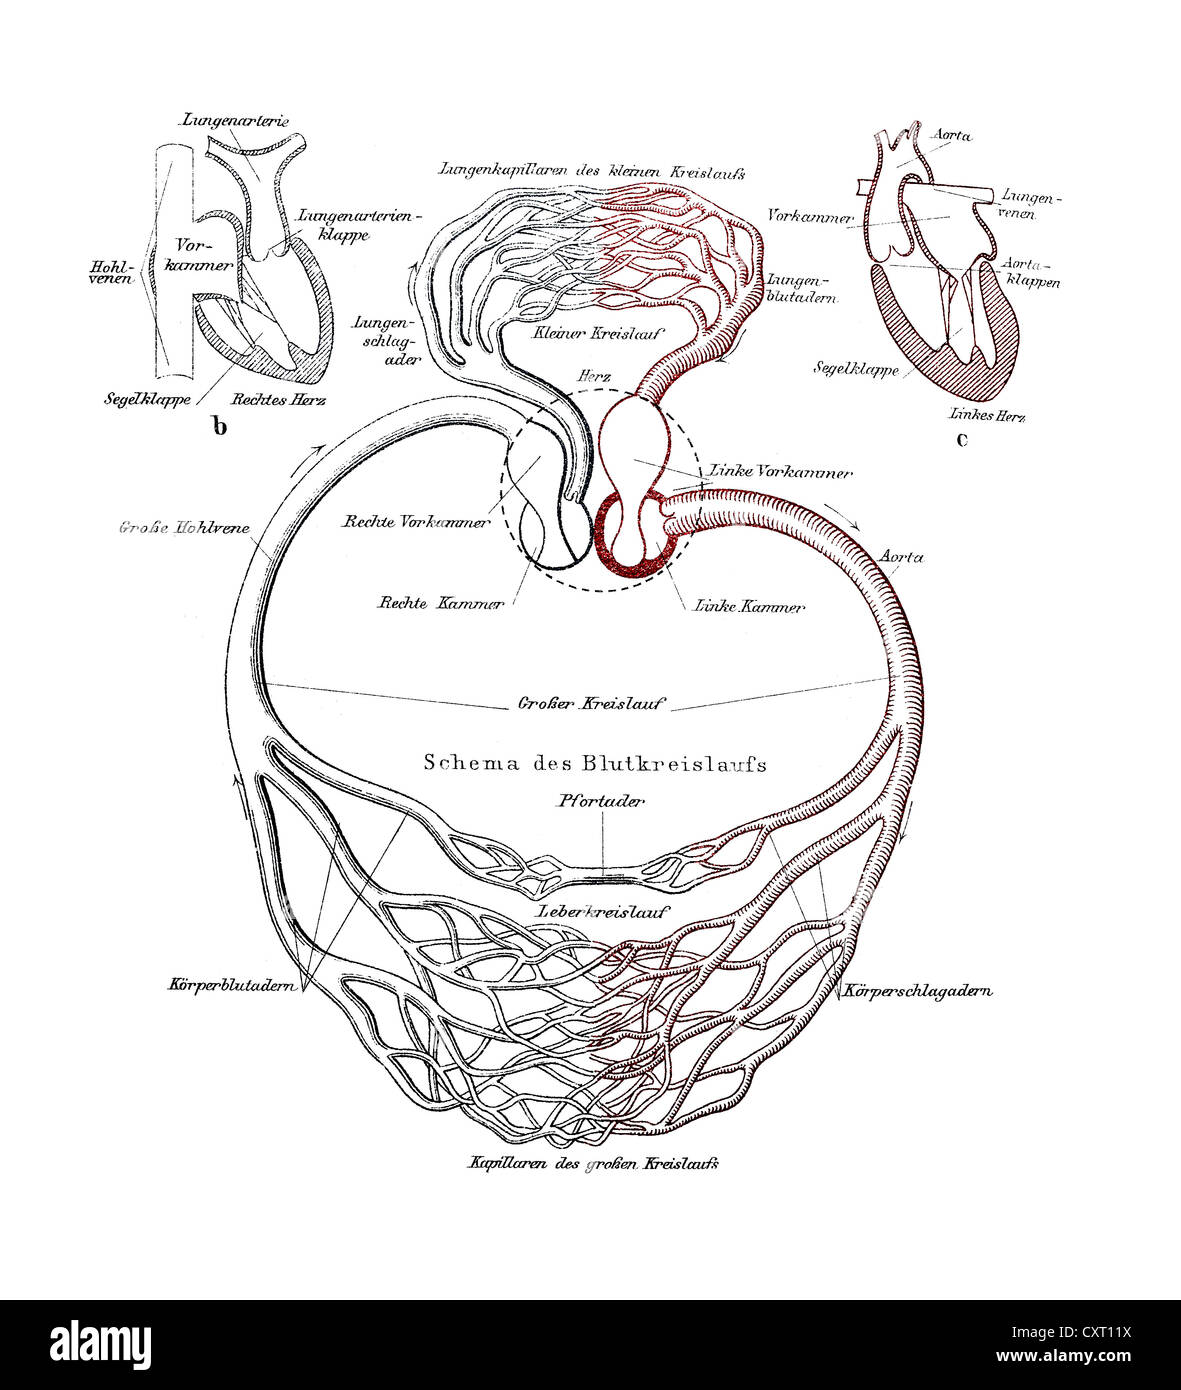 Circulatory system, anatomical illustration Stock Photo